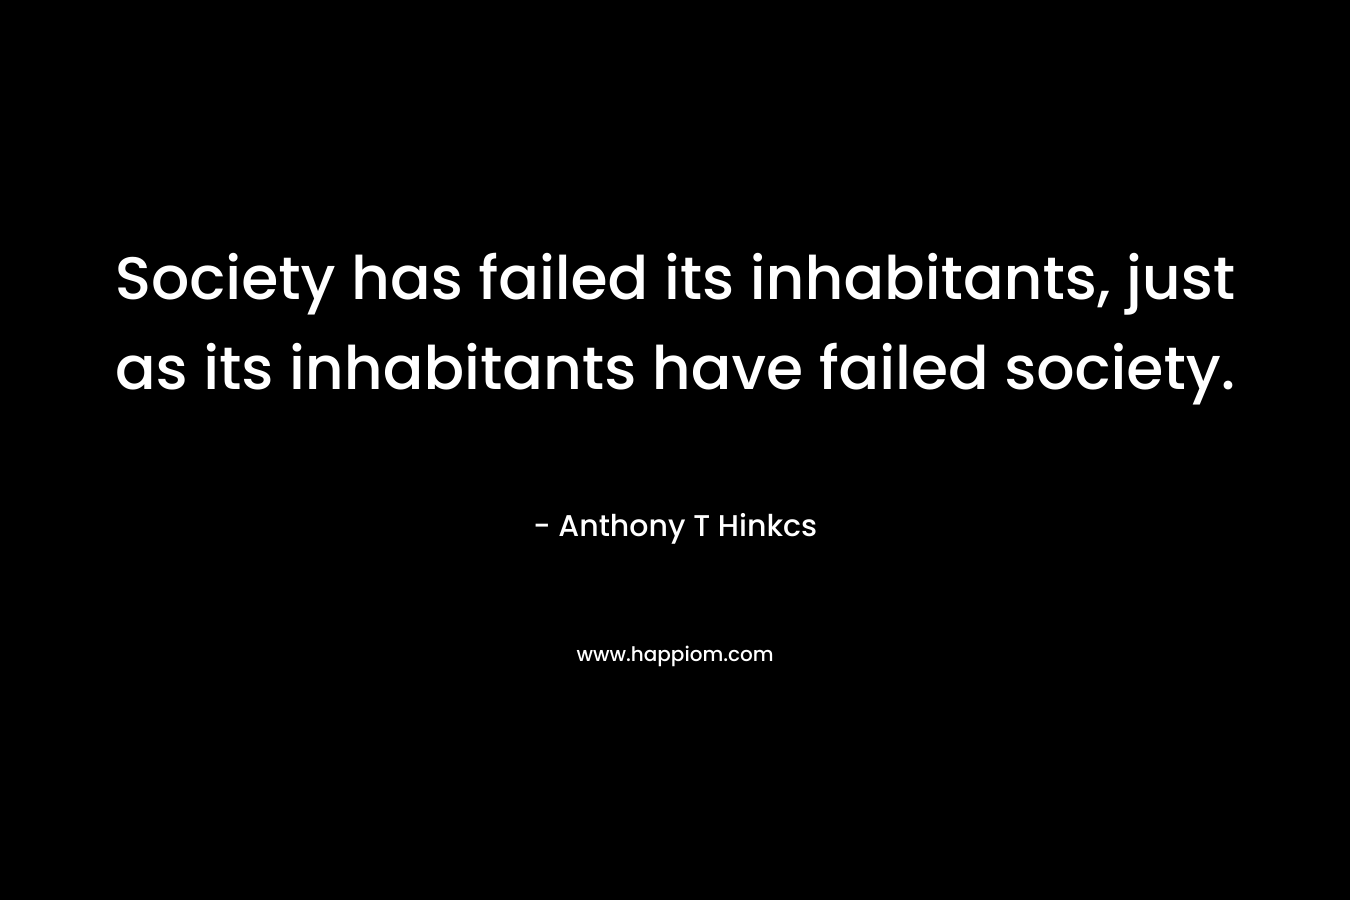 Society has failed its inhabitants, just as its inhabitants have failed society.